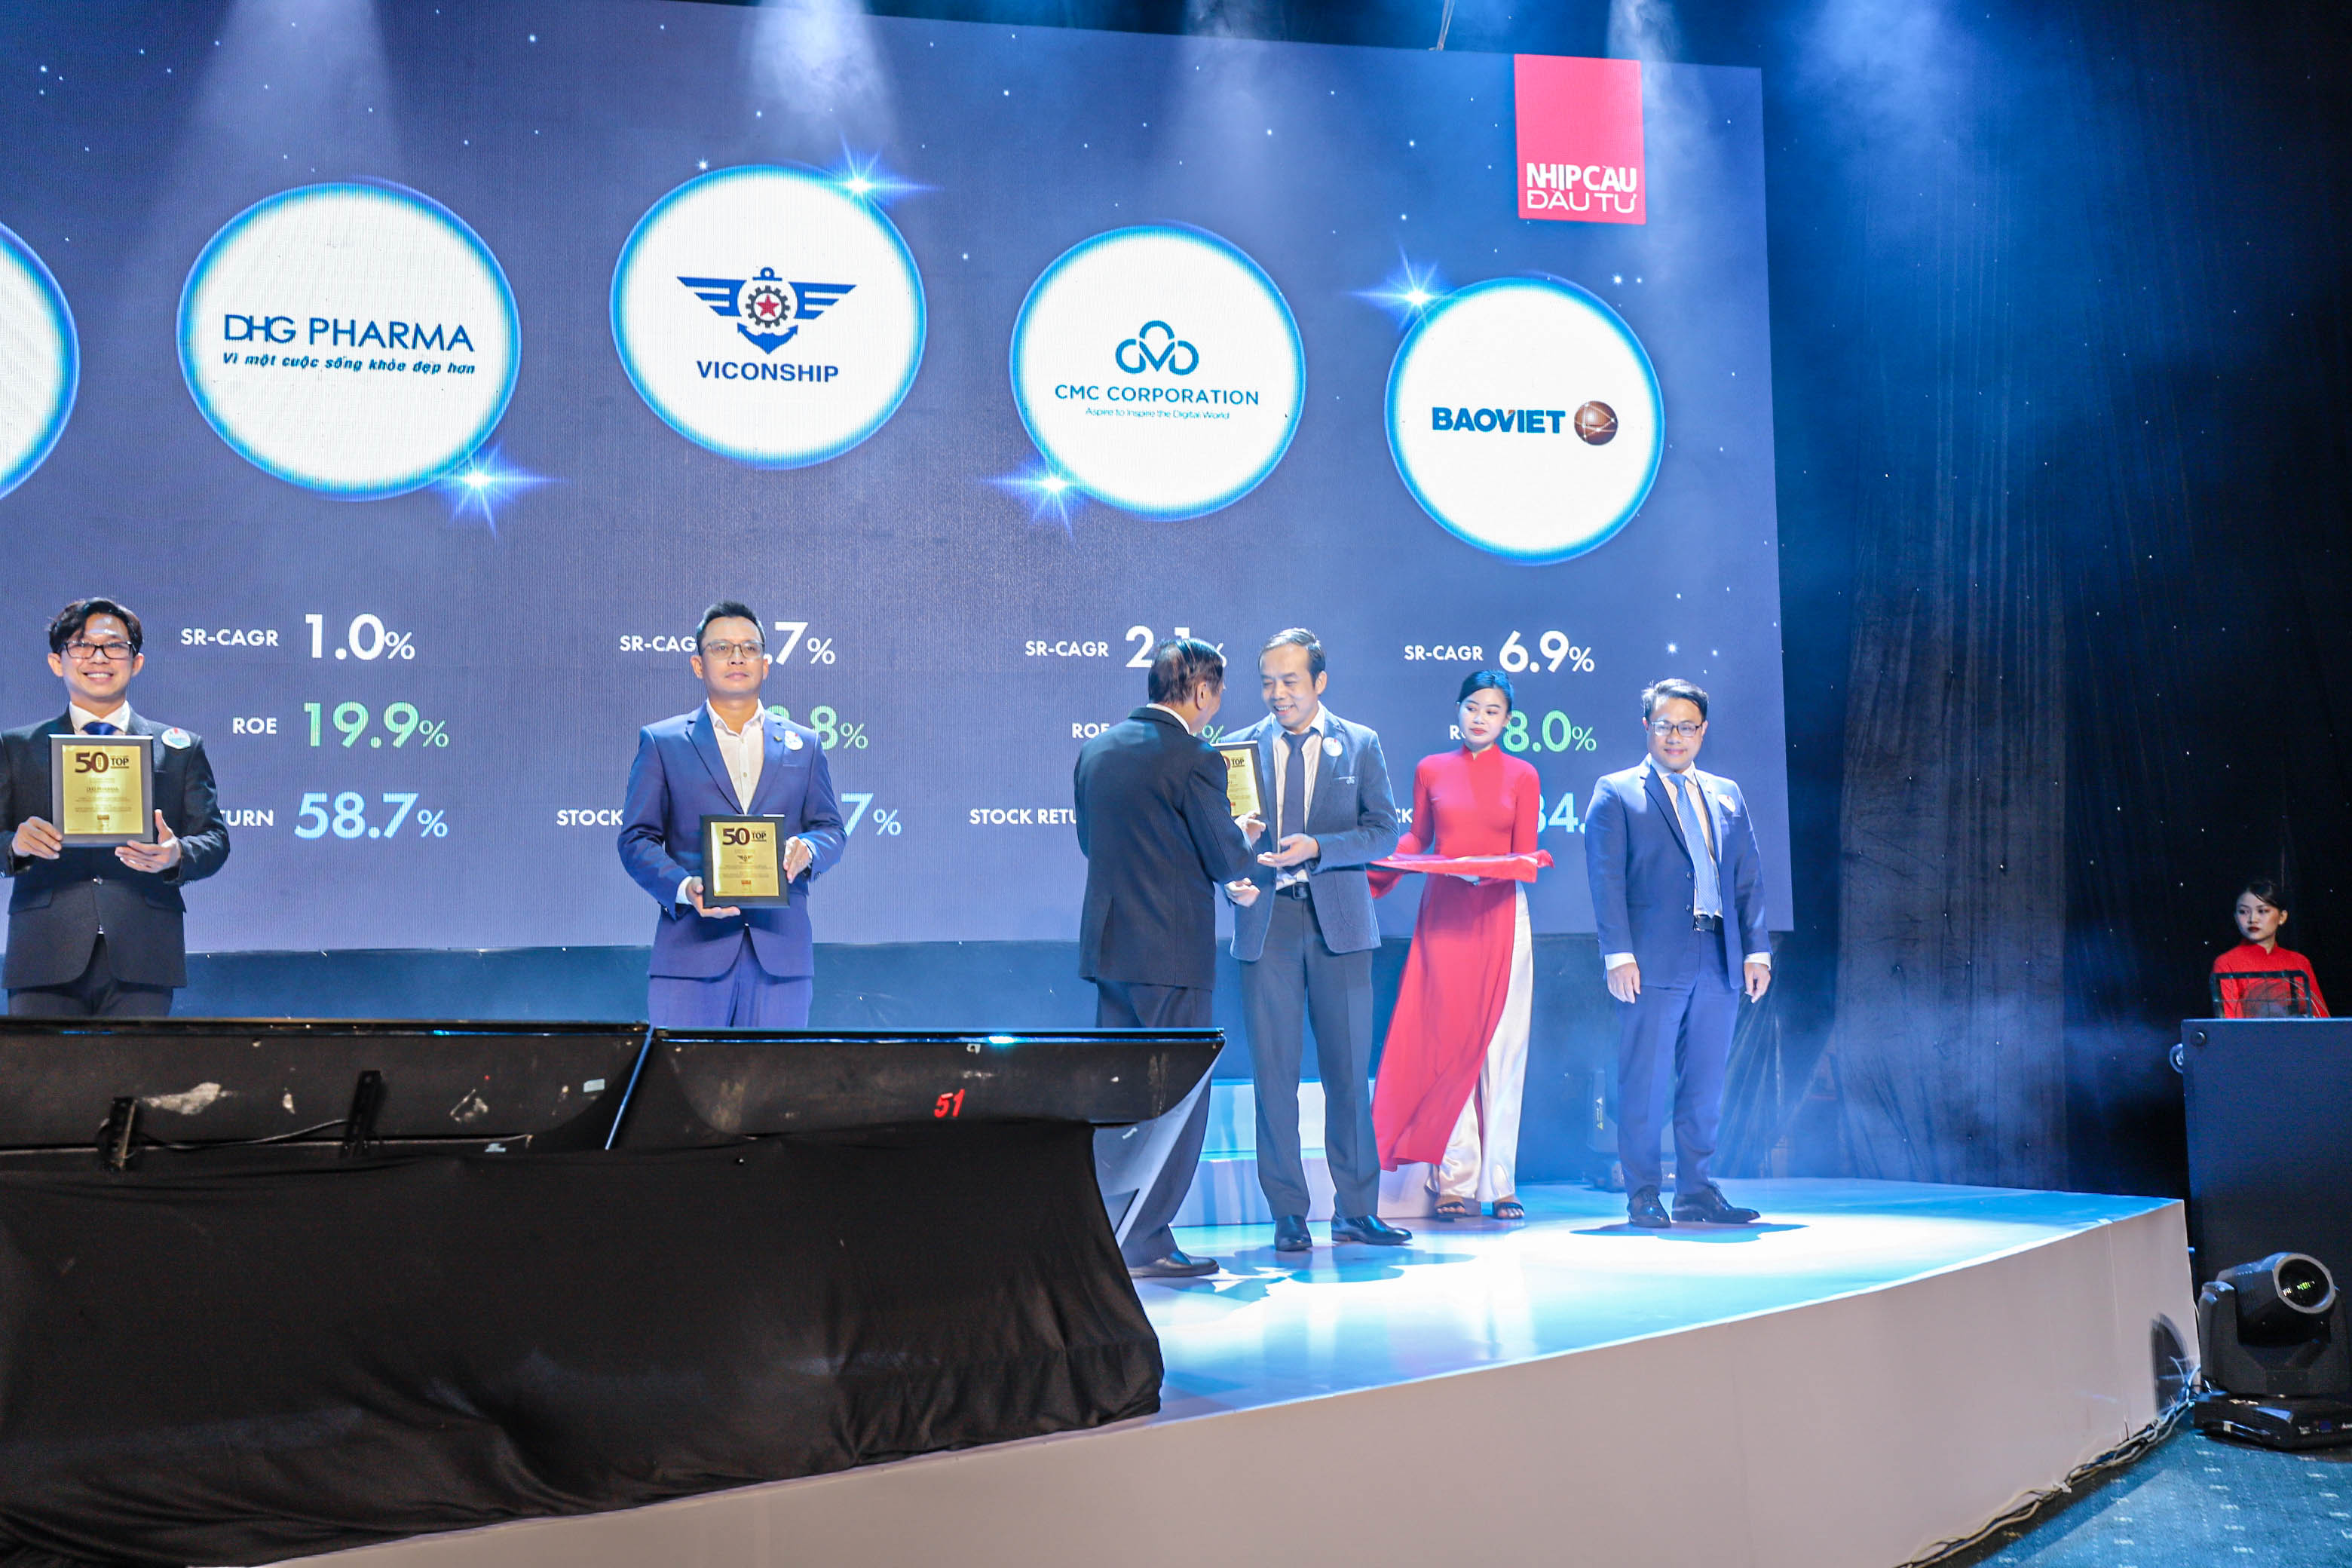 CMC honored in "Vietnam's Top 50 Best-performing Companies"